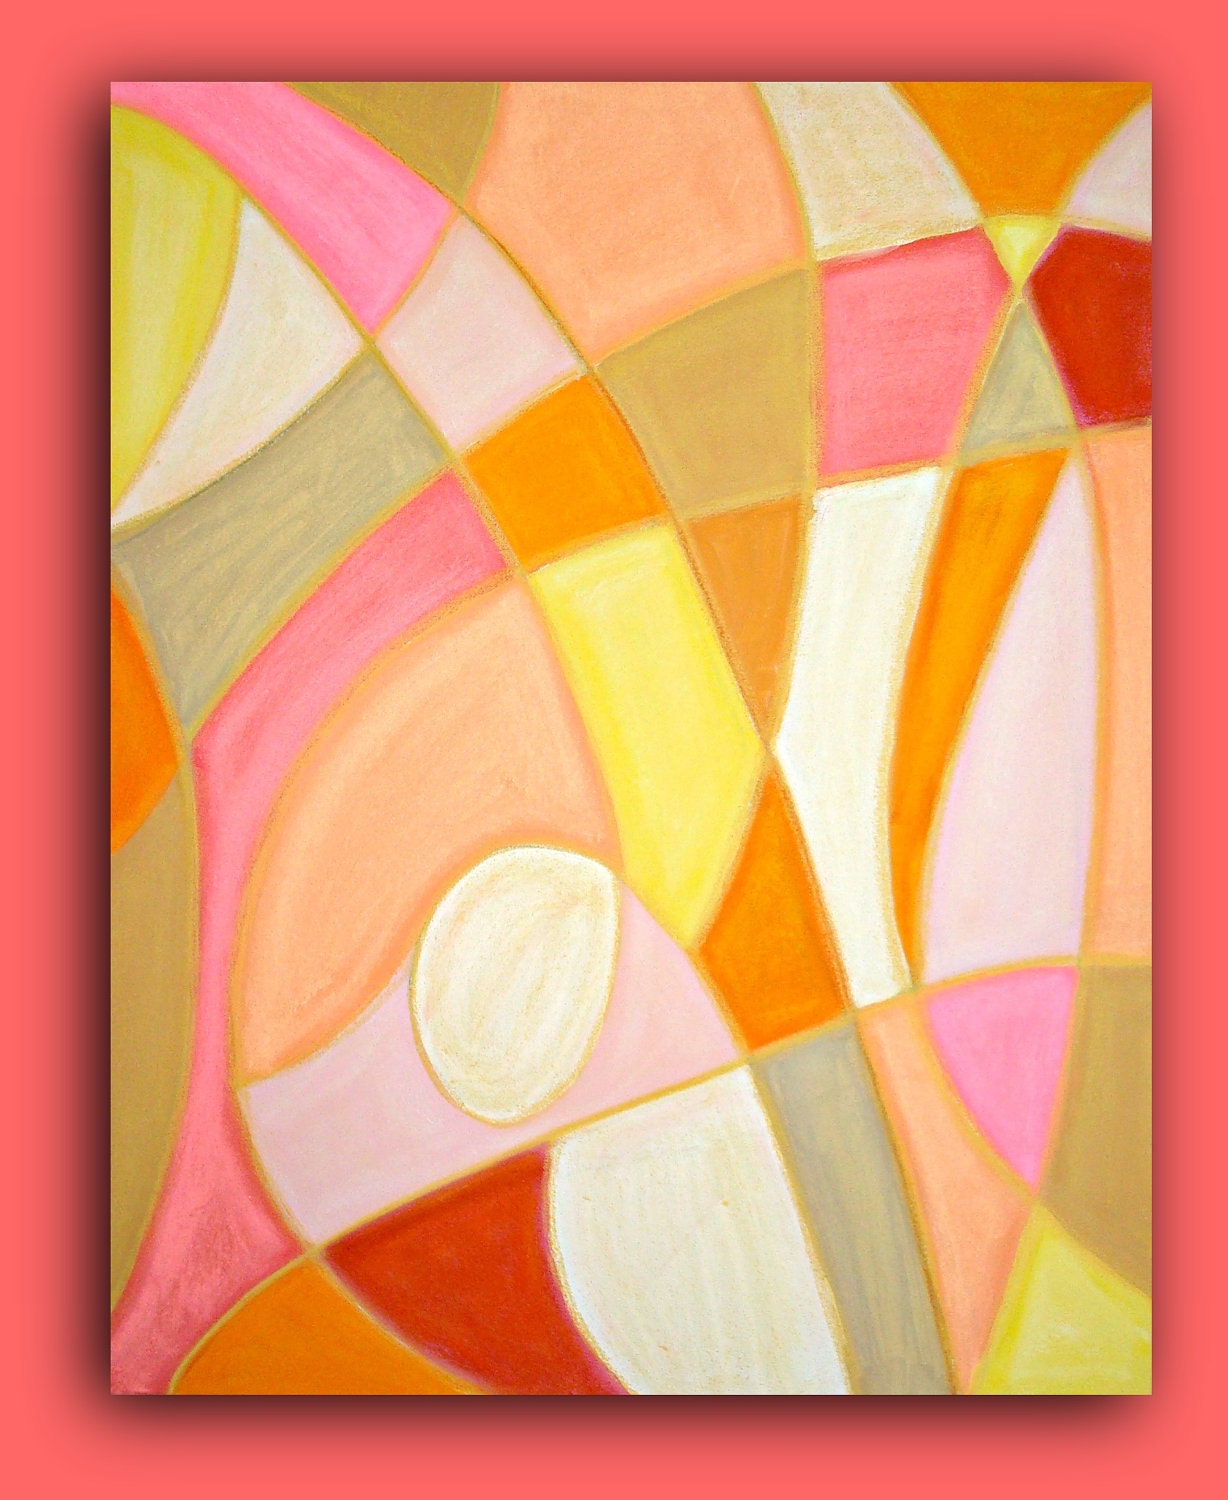 Abstract Acrylic Painting on Gallery Canvas Fine Art Titled: SALT WATER TAFFY 24x30x1.5" by Ora Birenbaum - orabirenbaum